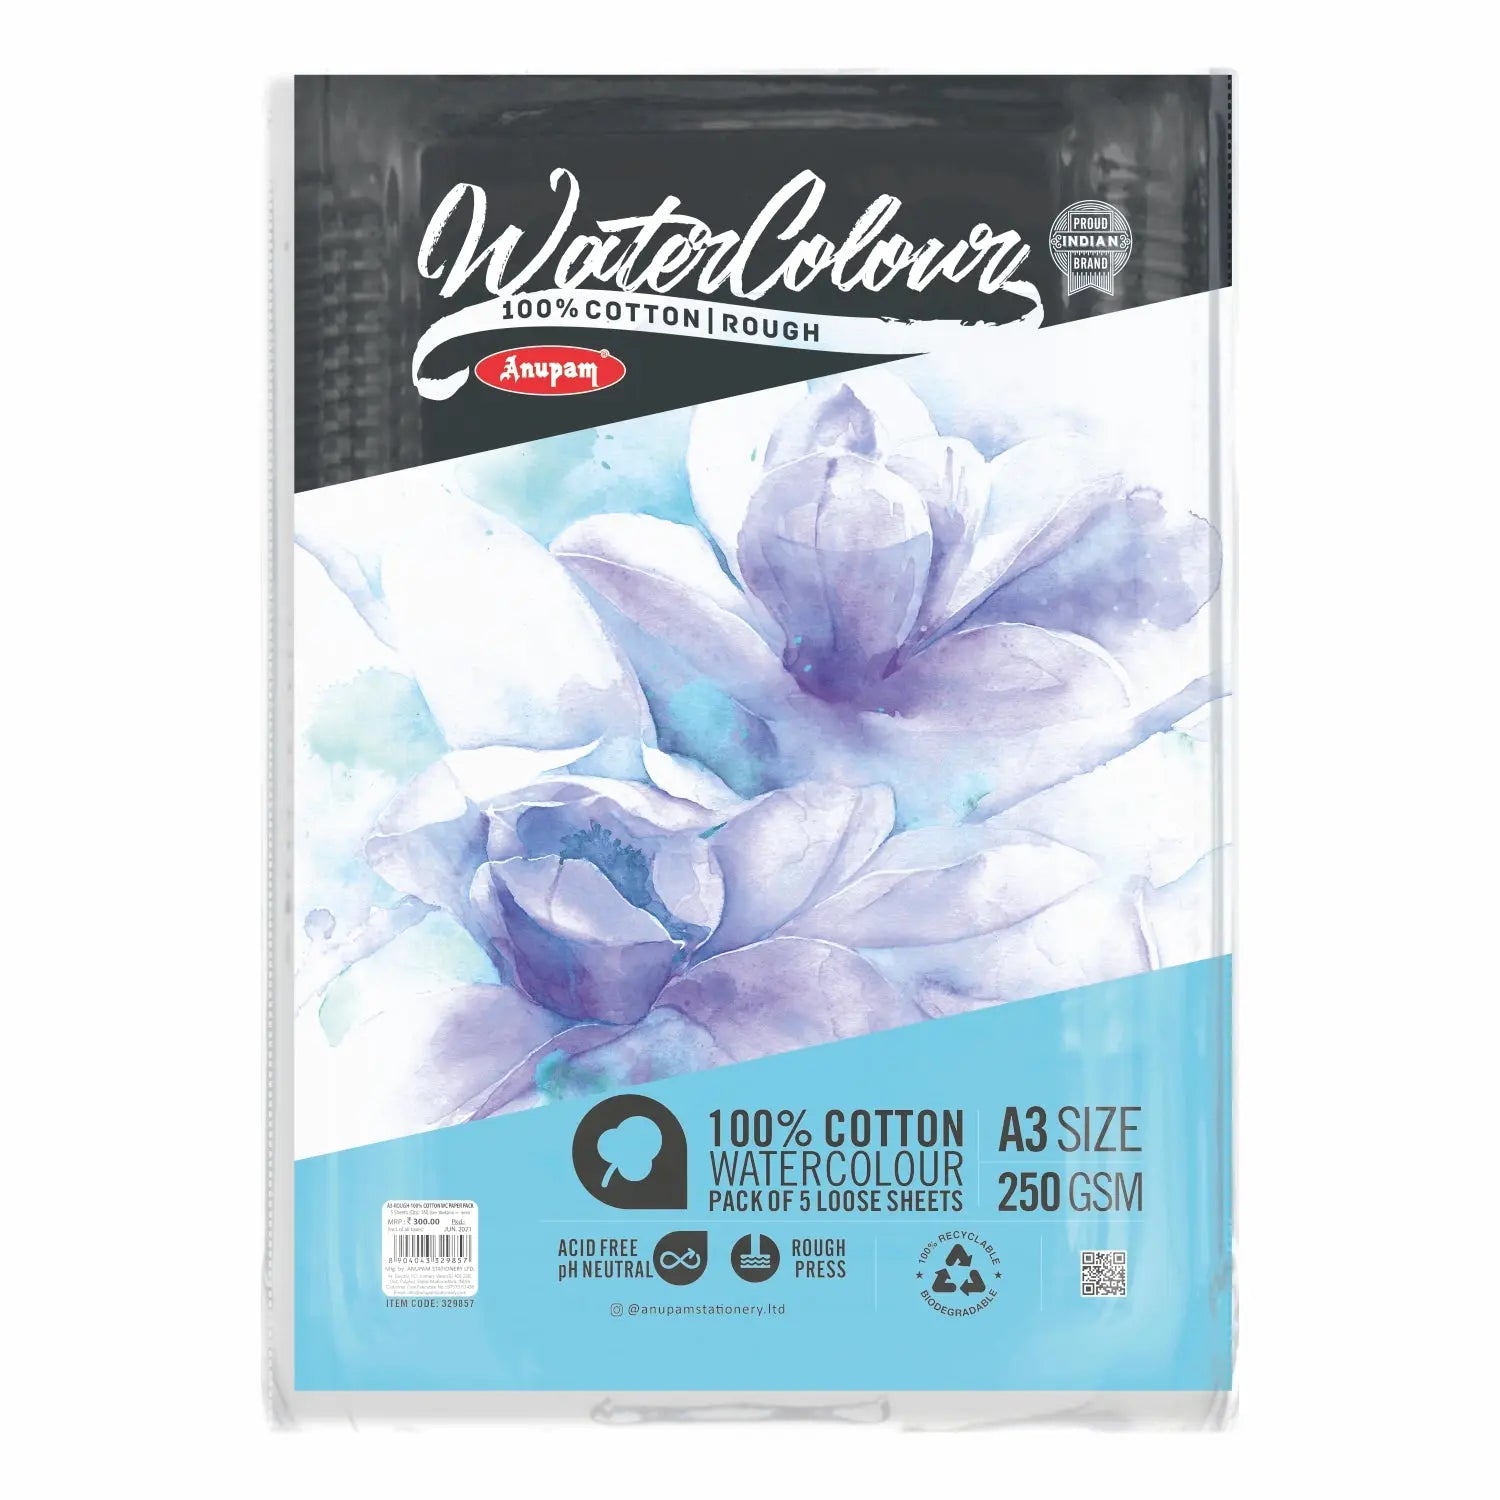 Anupam 100% Cotton Watercolour Paper - Loose Sheets - 250 GSM - Rough Pressed Anupam